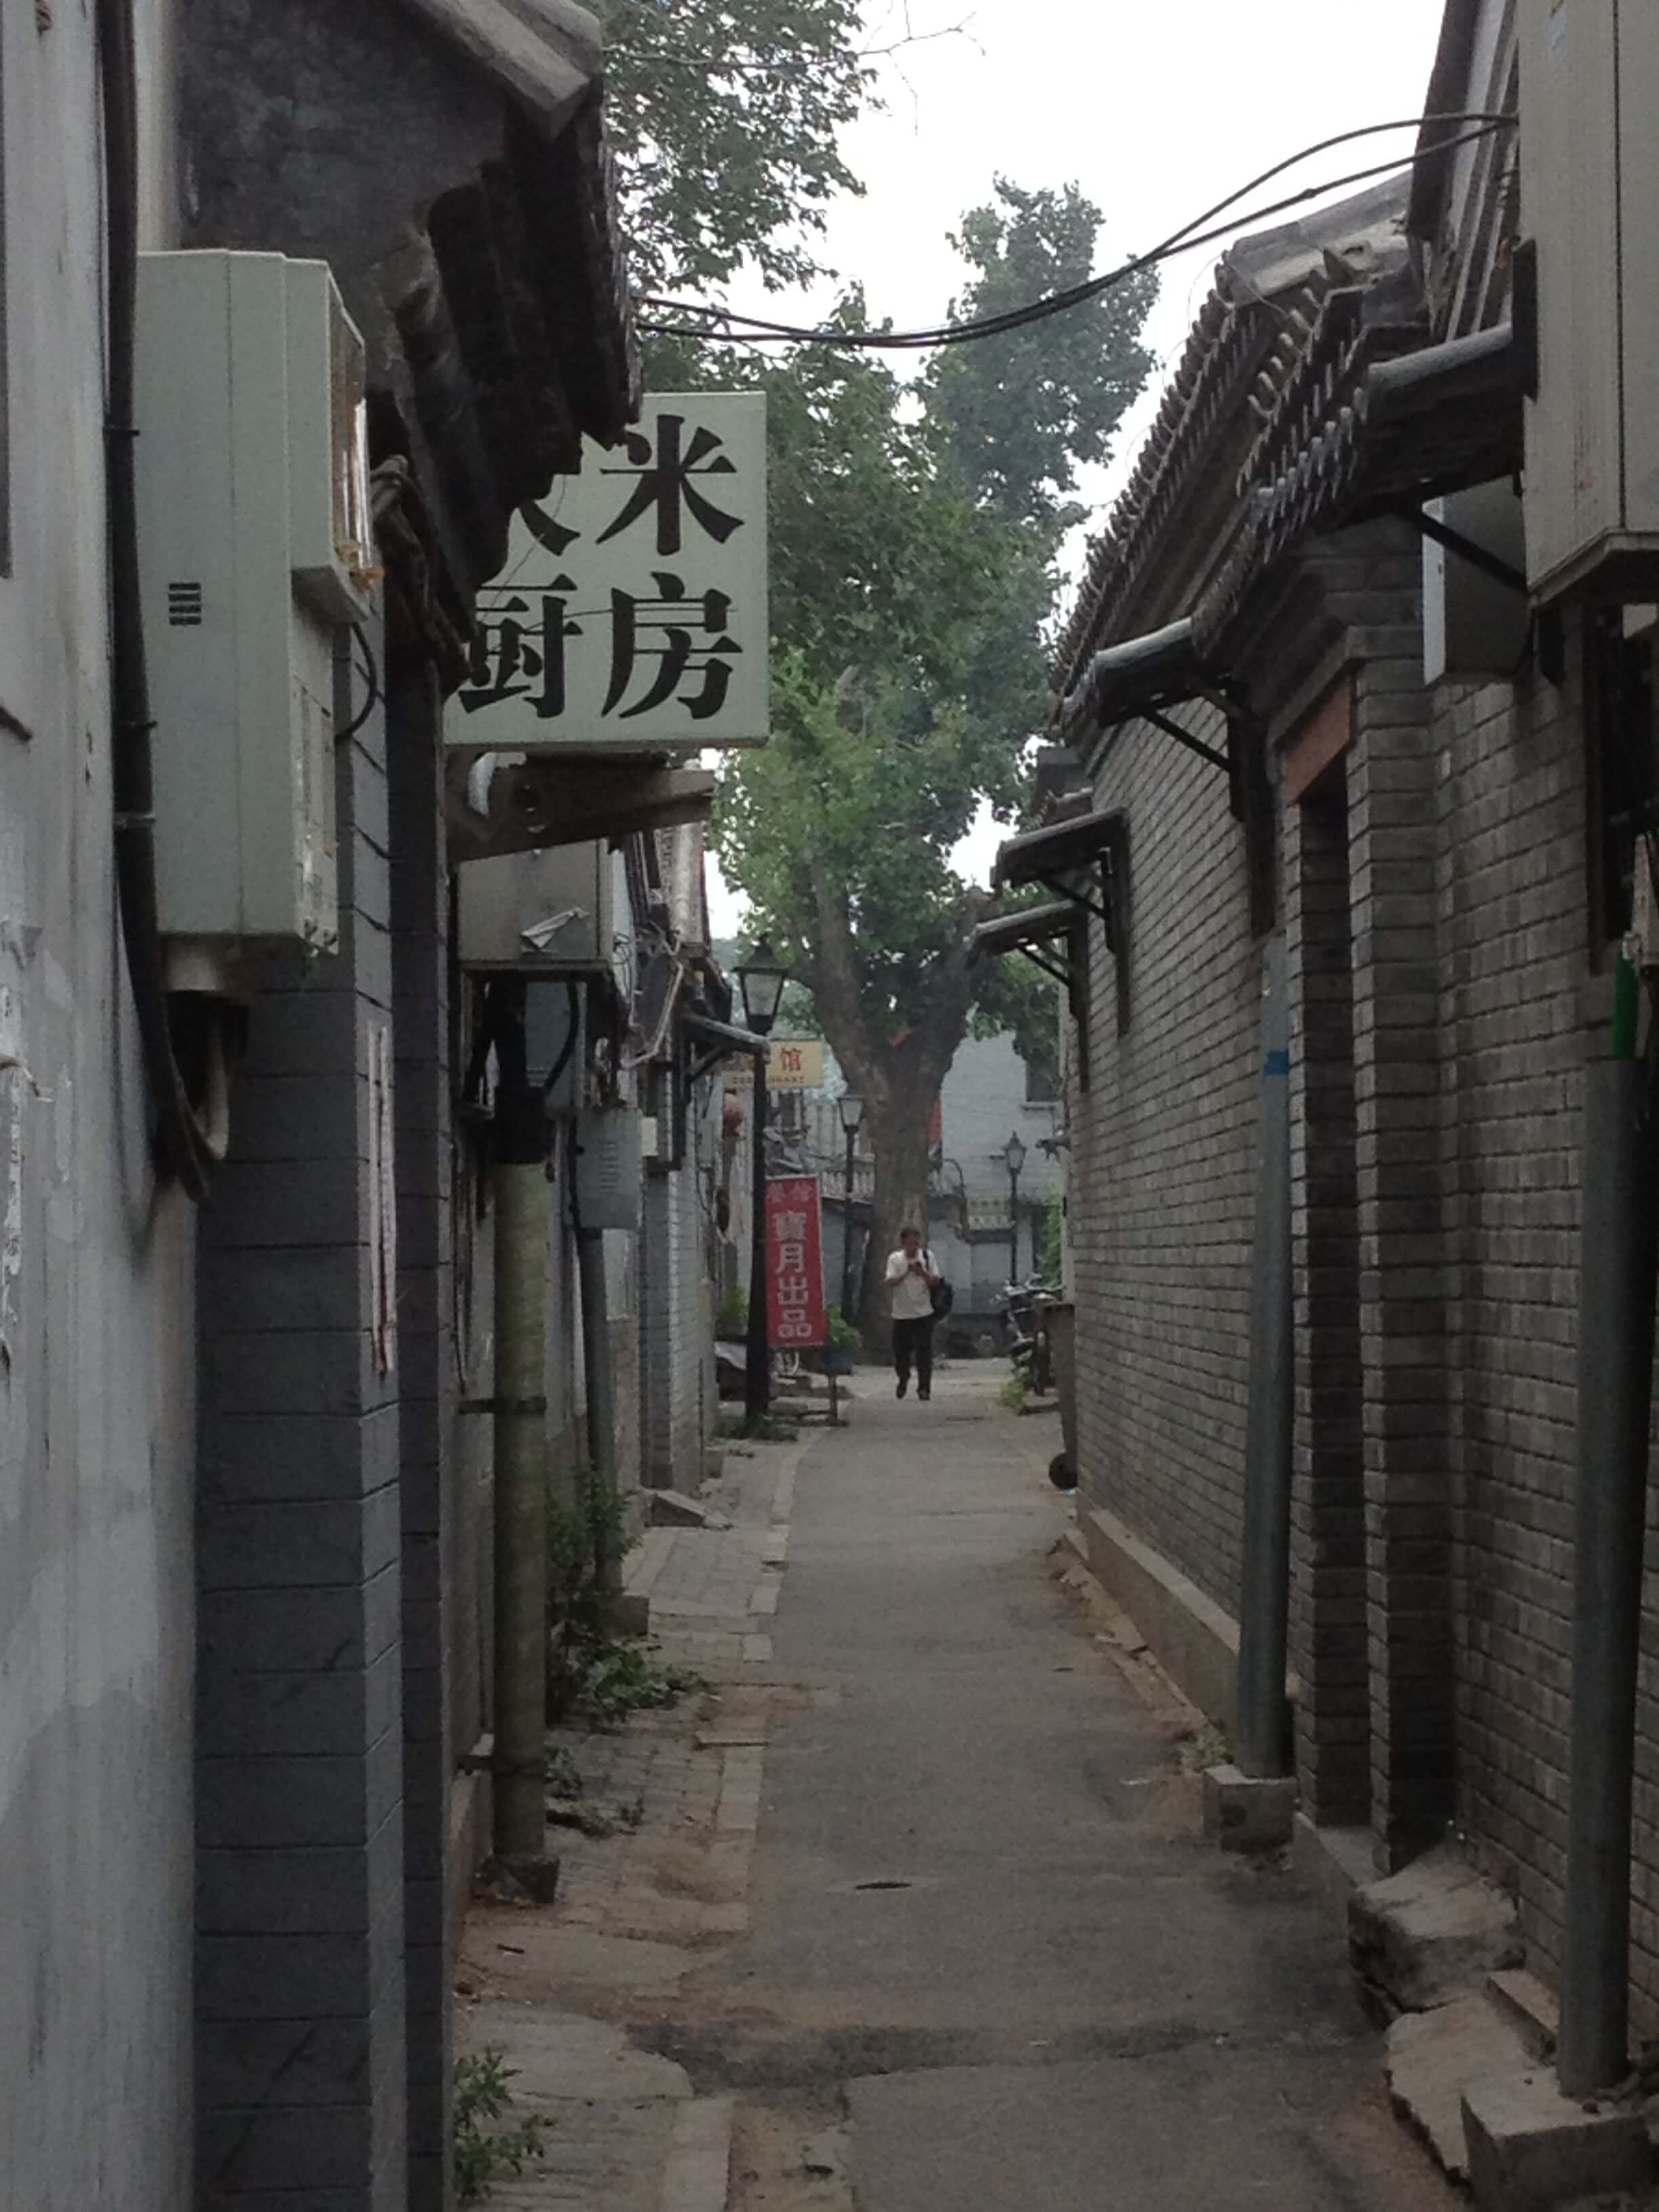 Beijing is full of hutong or narrow alleyways